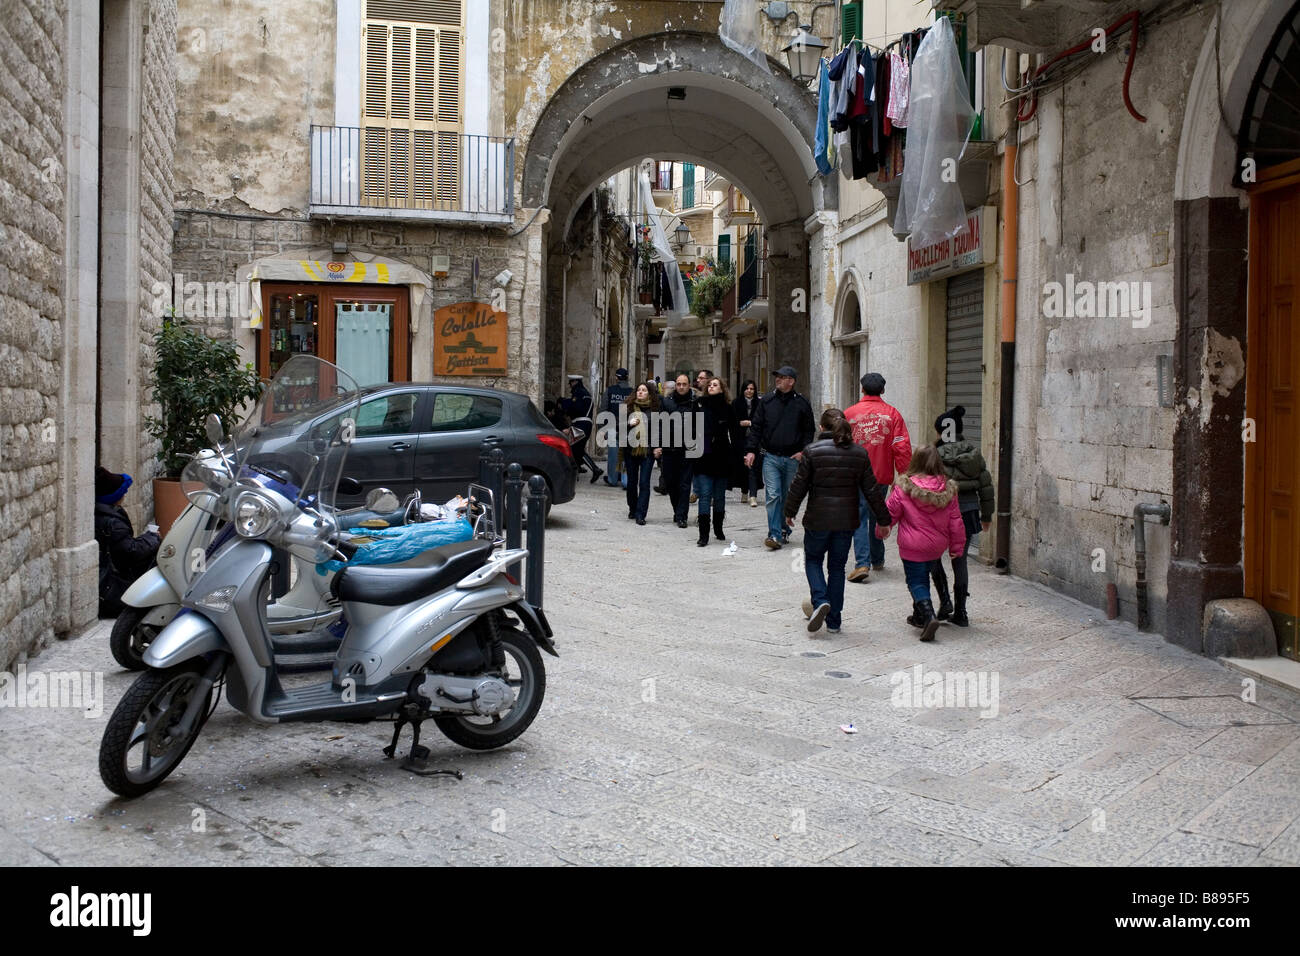 A street scene in Bari Vecchia, southern Italy. Stock Photo